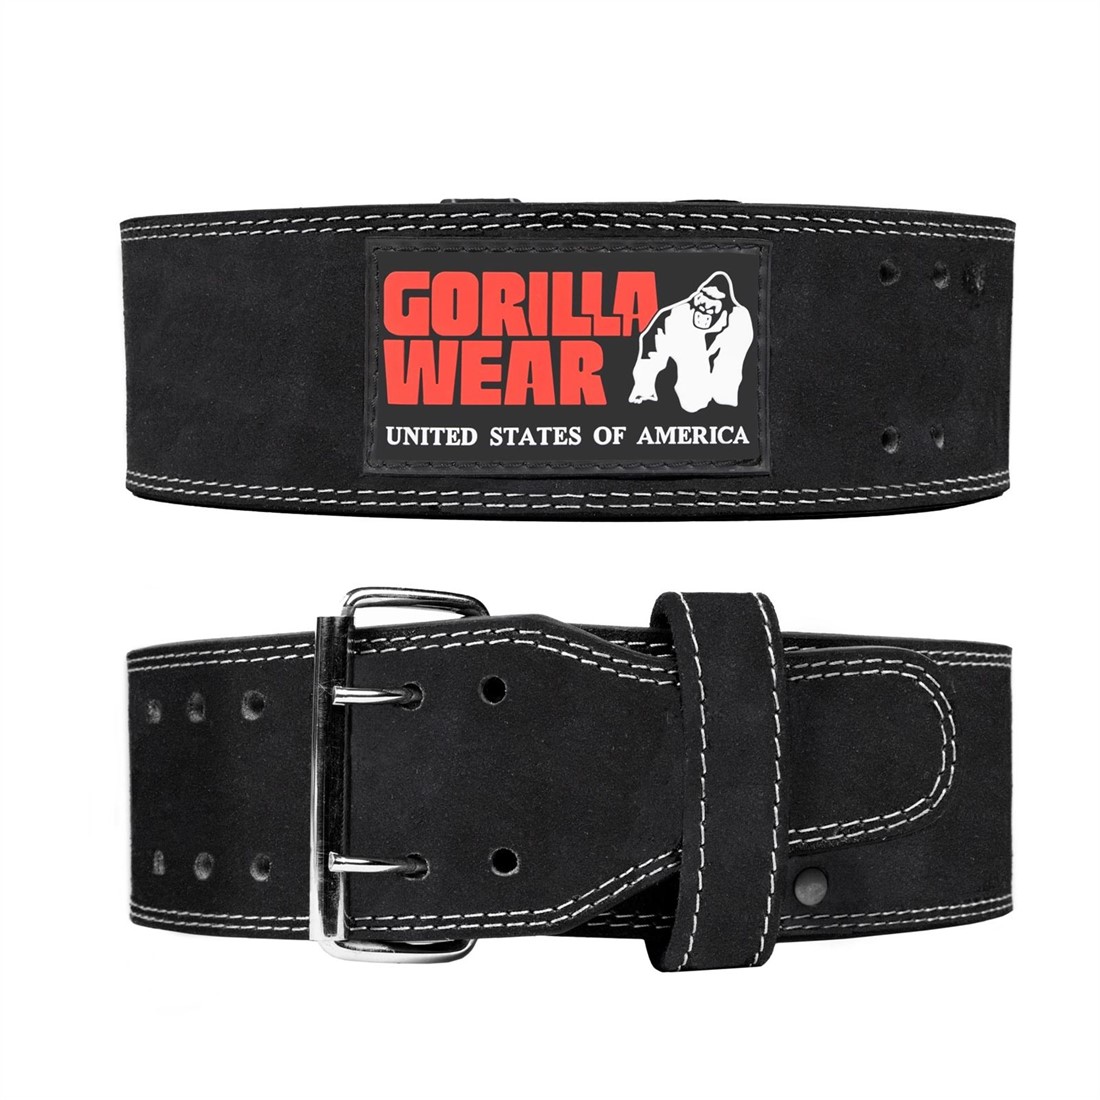 Gorilla Wear 4 Inch Leather Lifting Belt - Brown